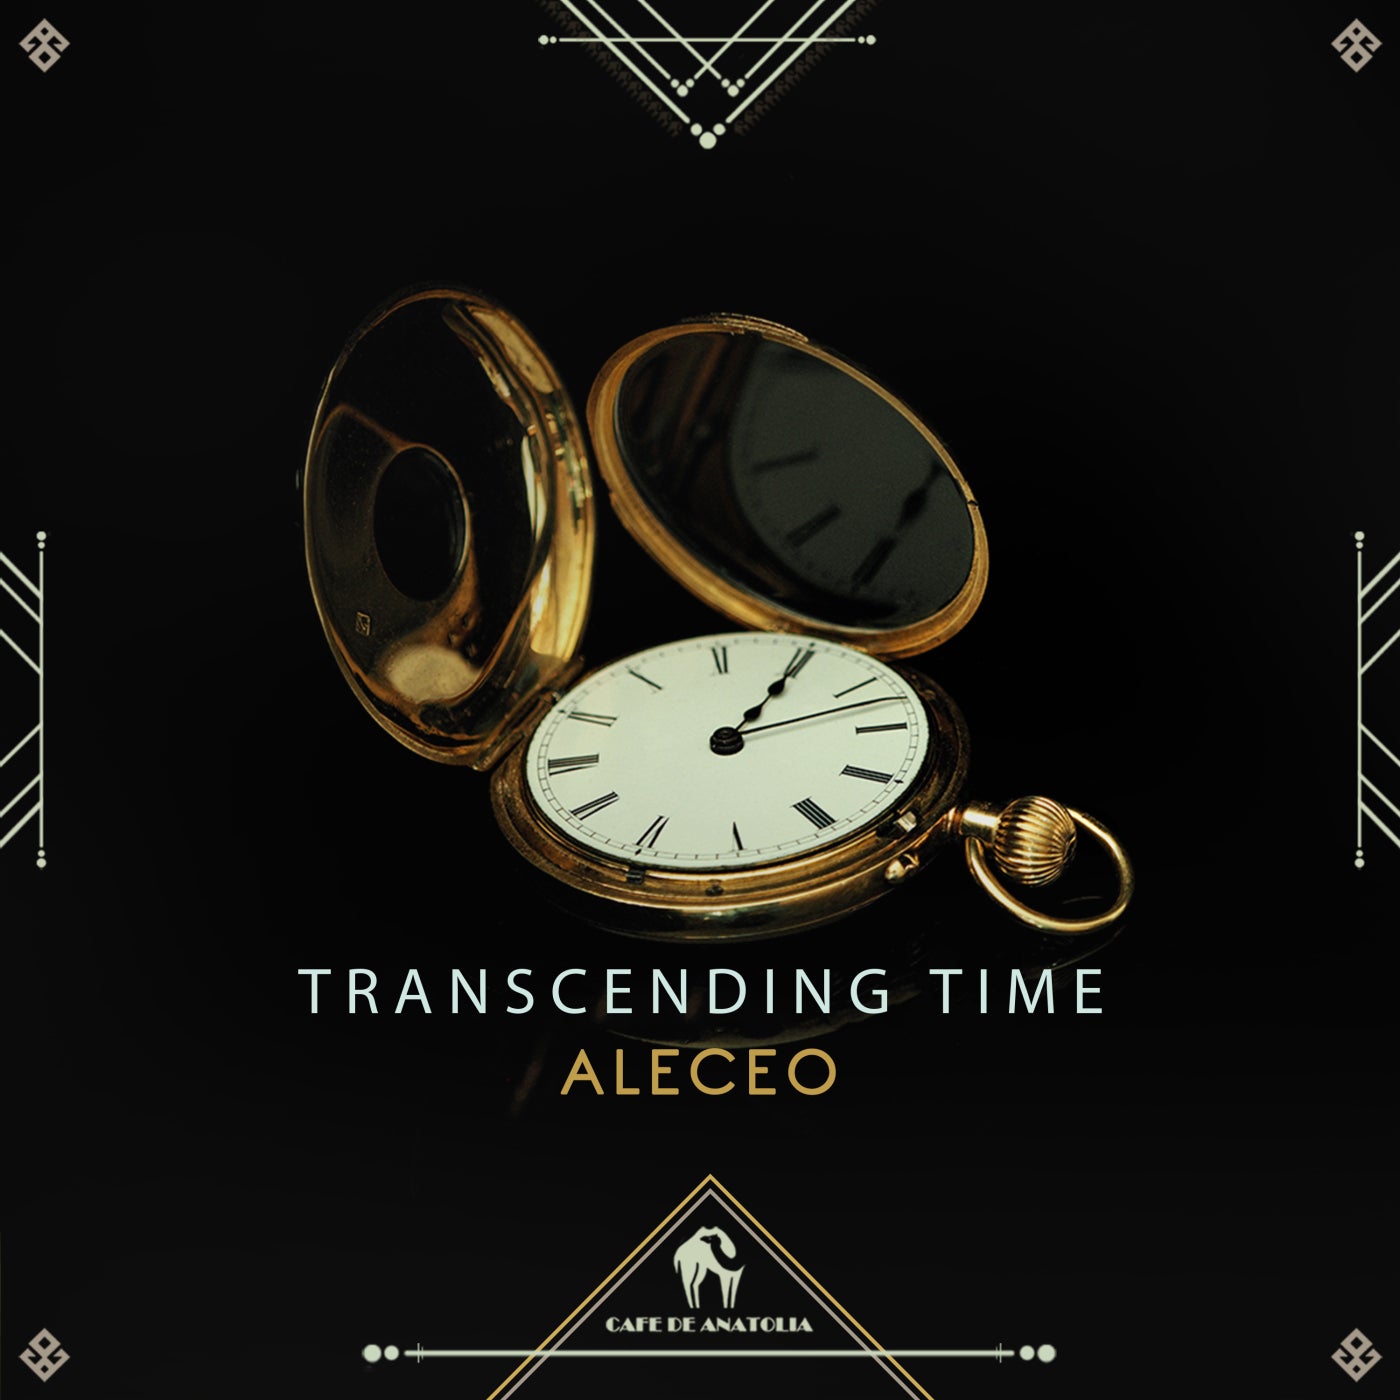 Aleceo - Transcending Time [CDA036]